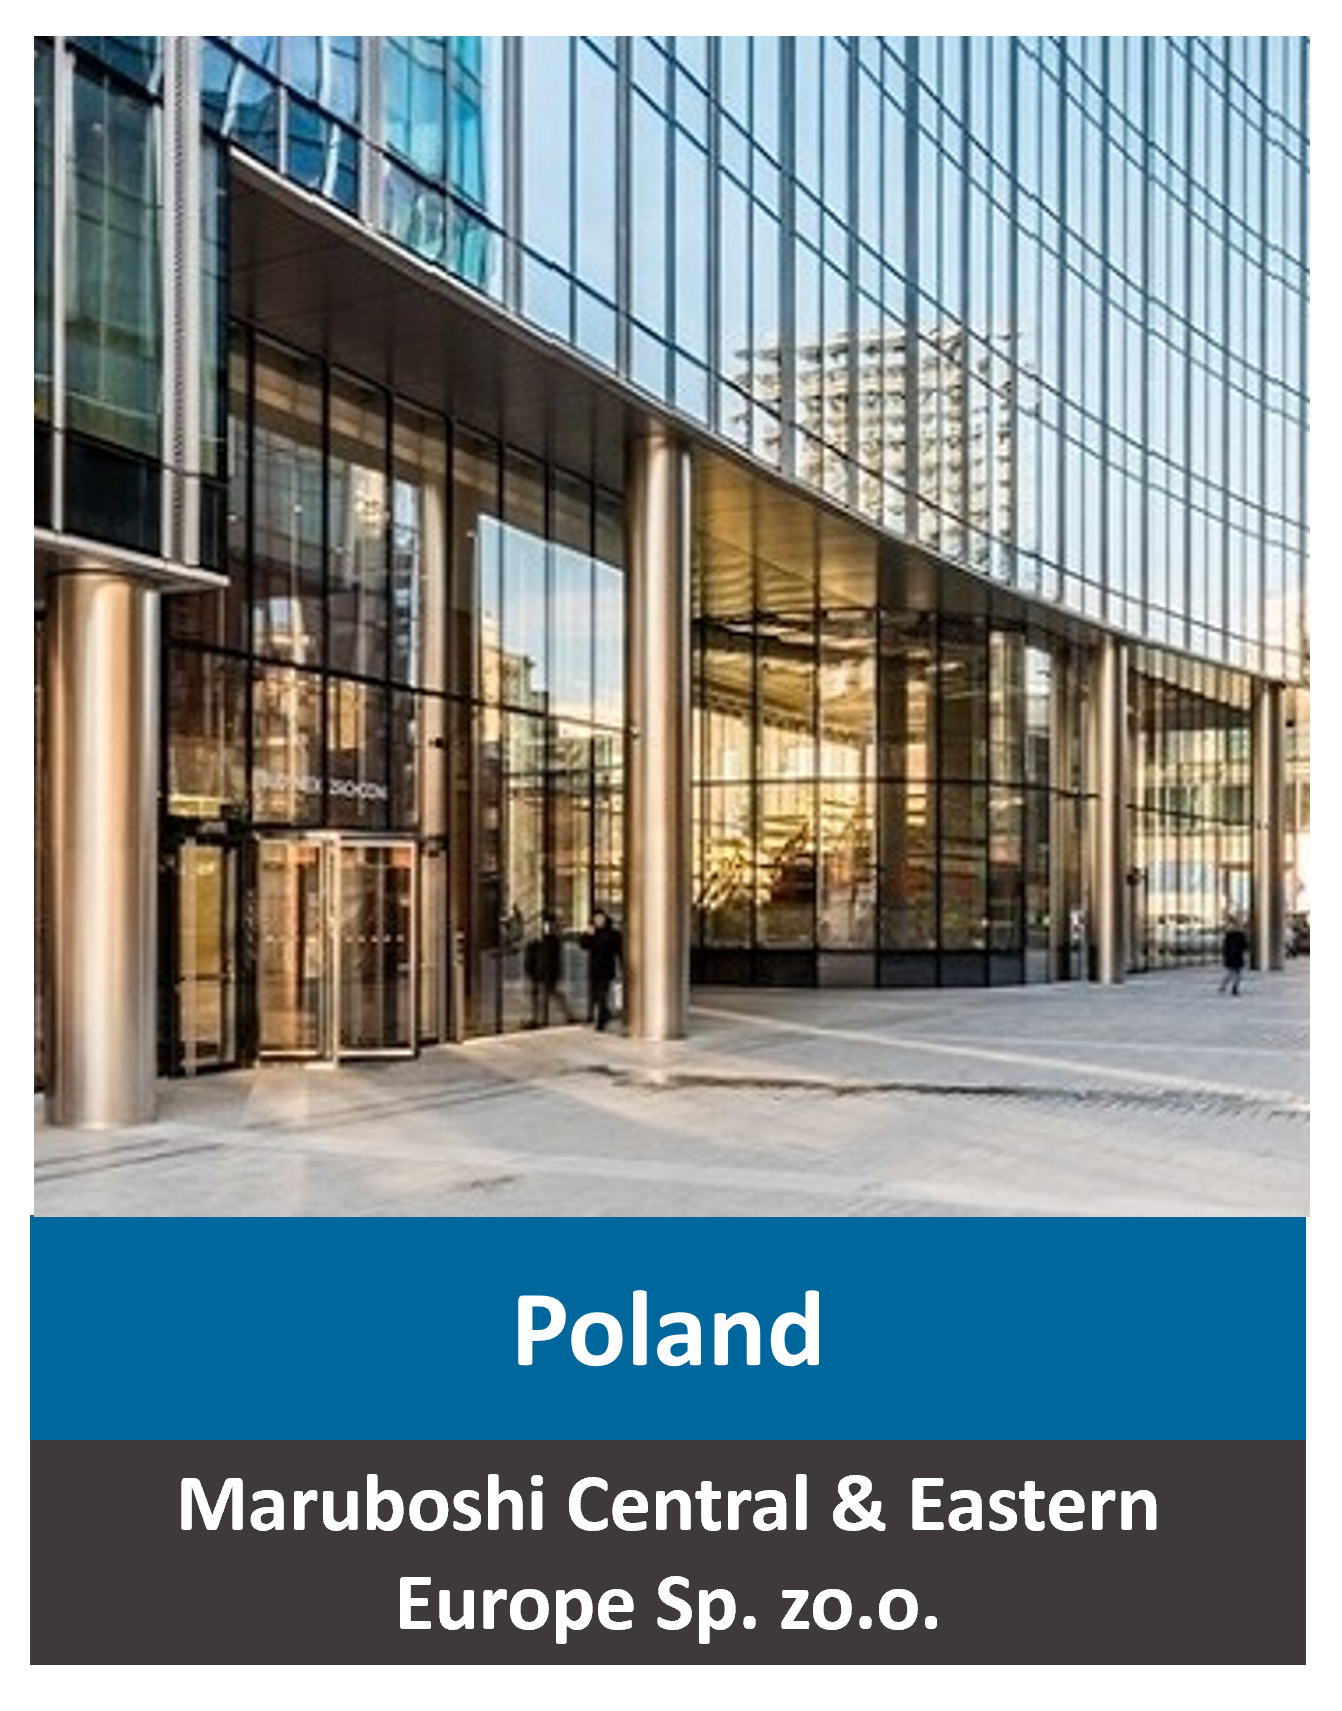 Poland-Maruboshi Central & Eastern Europe Sp. zo.o.